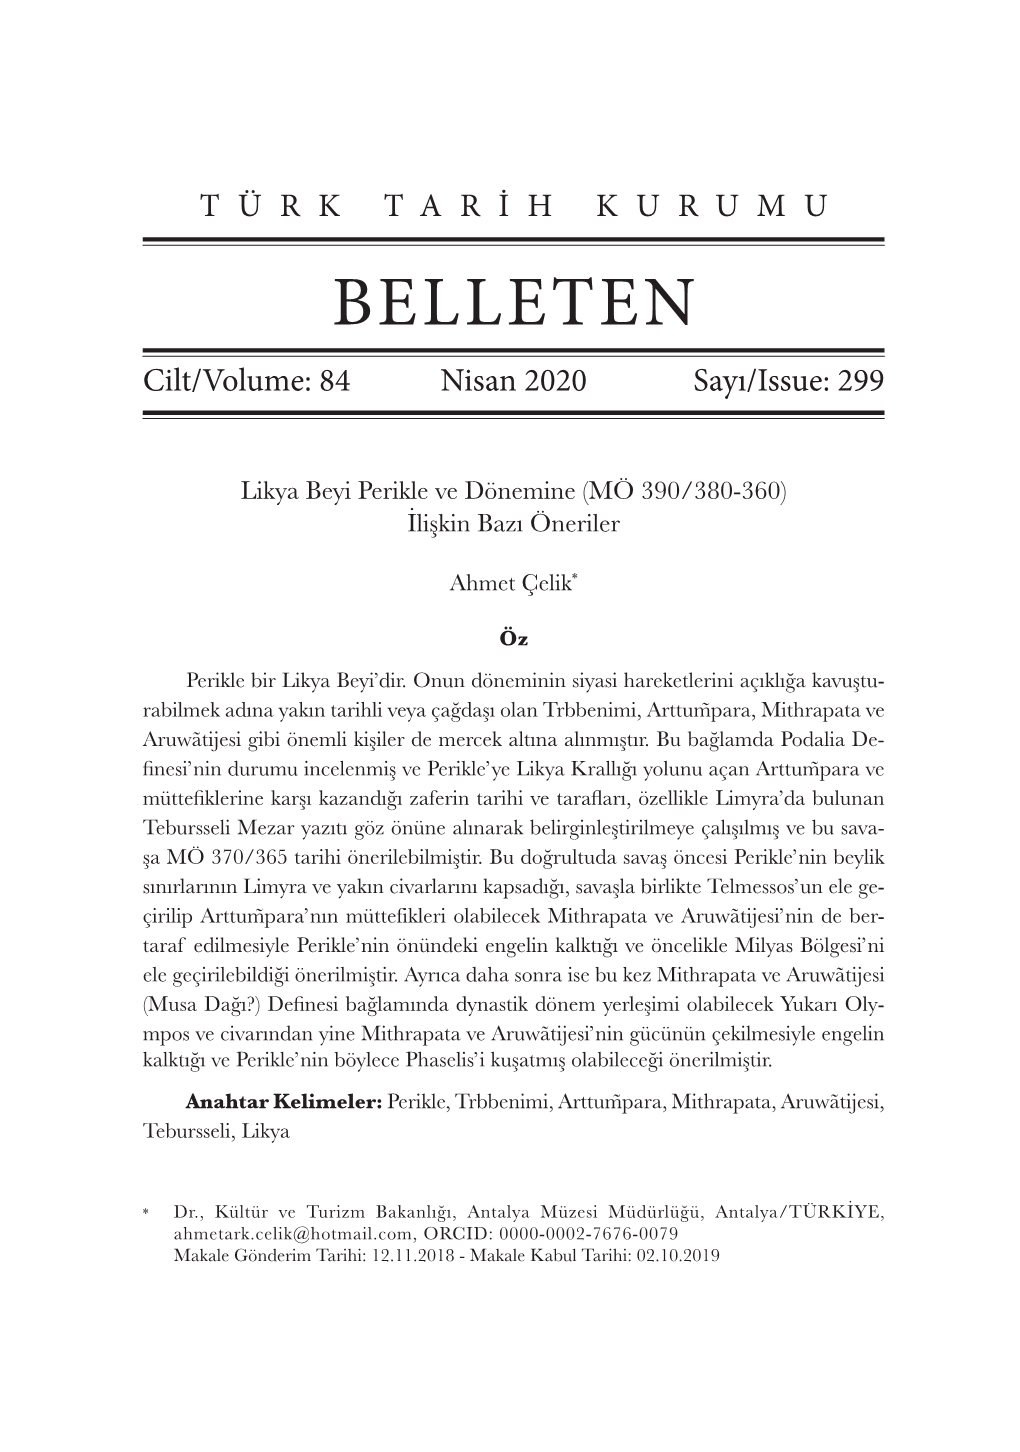 BELLETEN Cilt/Volume: 84 Nisan 2020 Sayı/Issue: 299